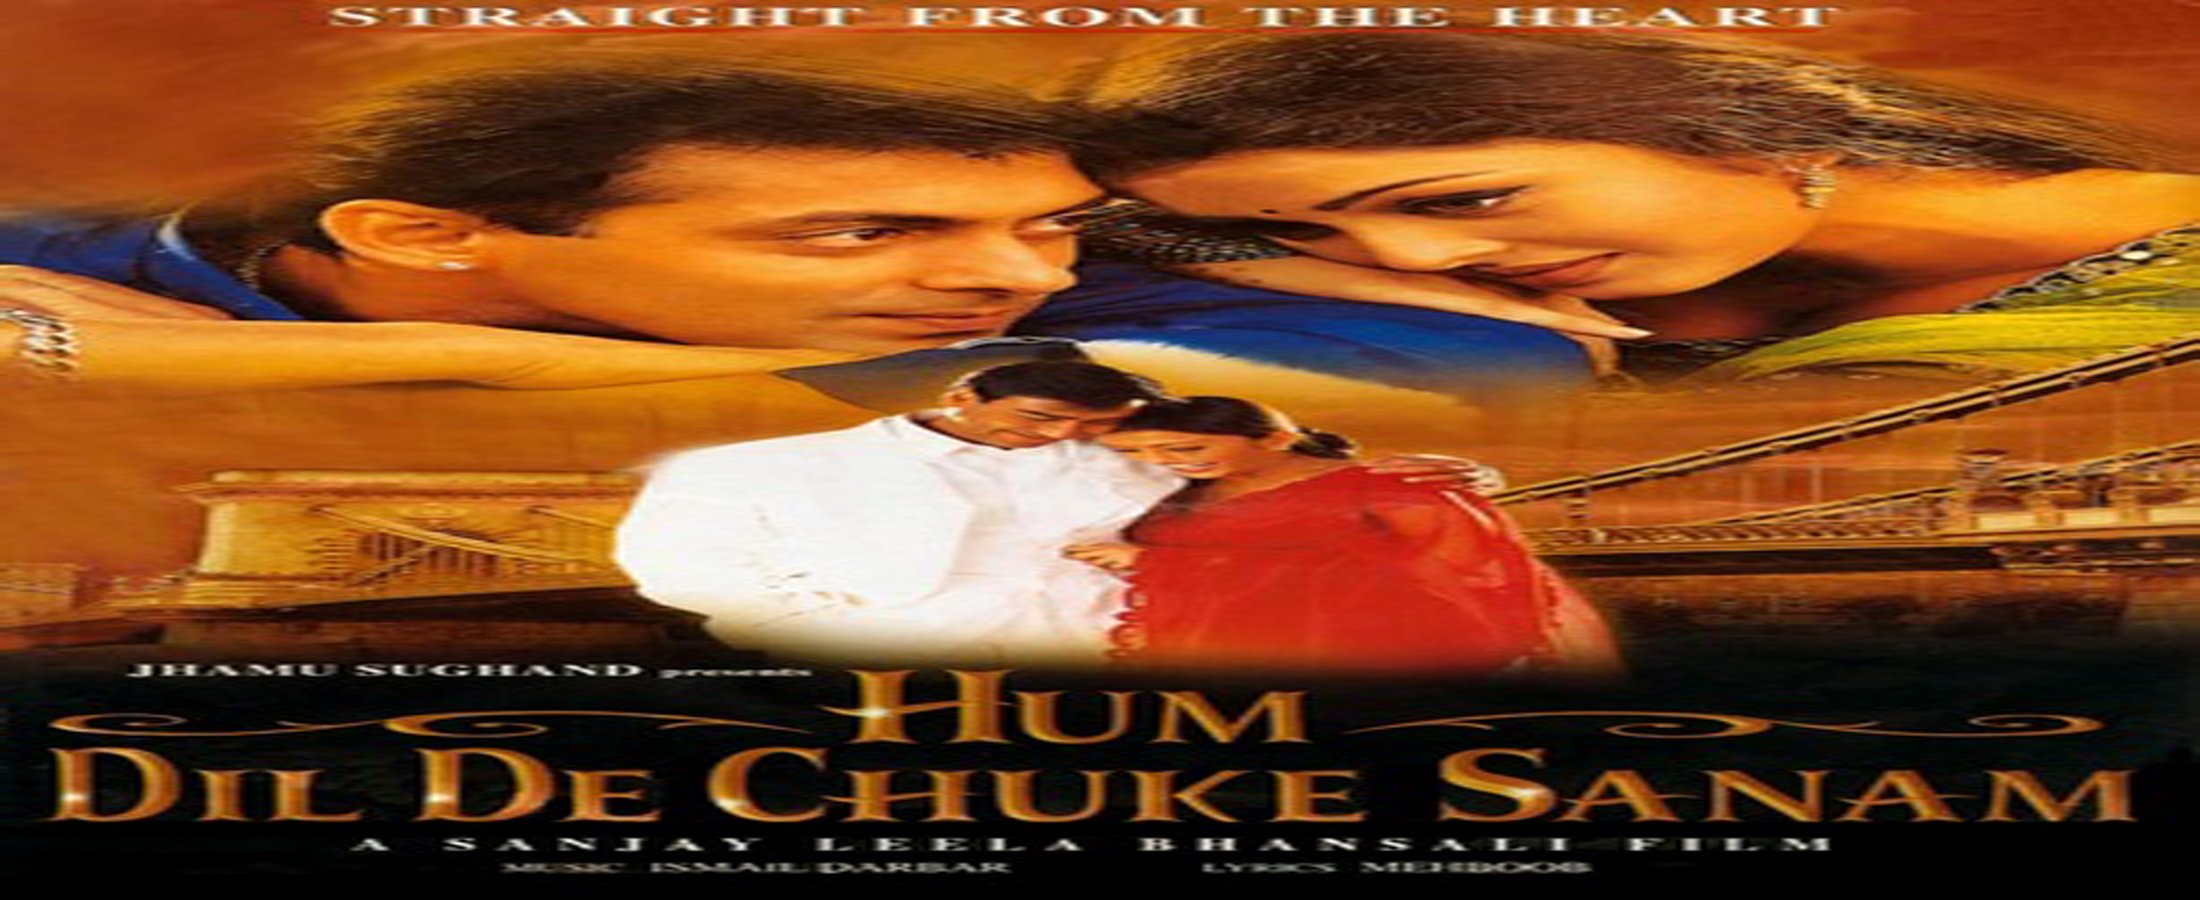 Hum Dil De Chuke Sanam subtitles torrent